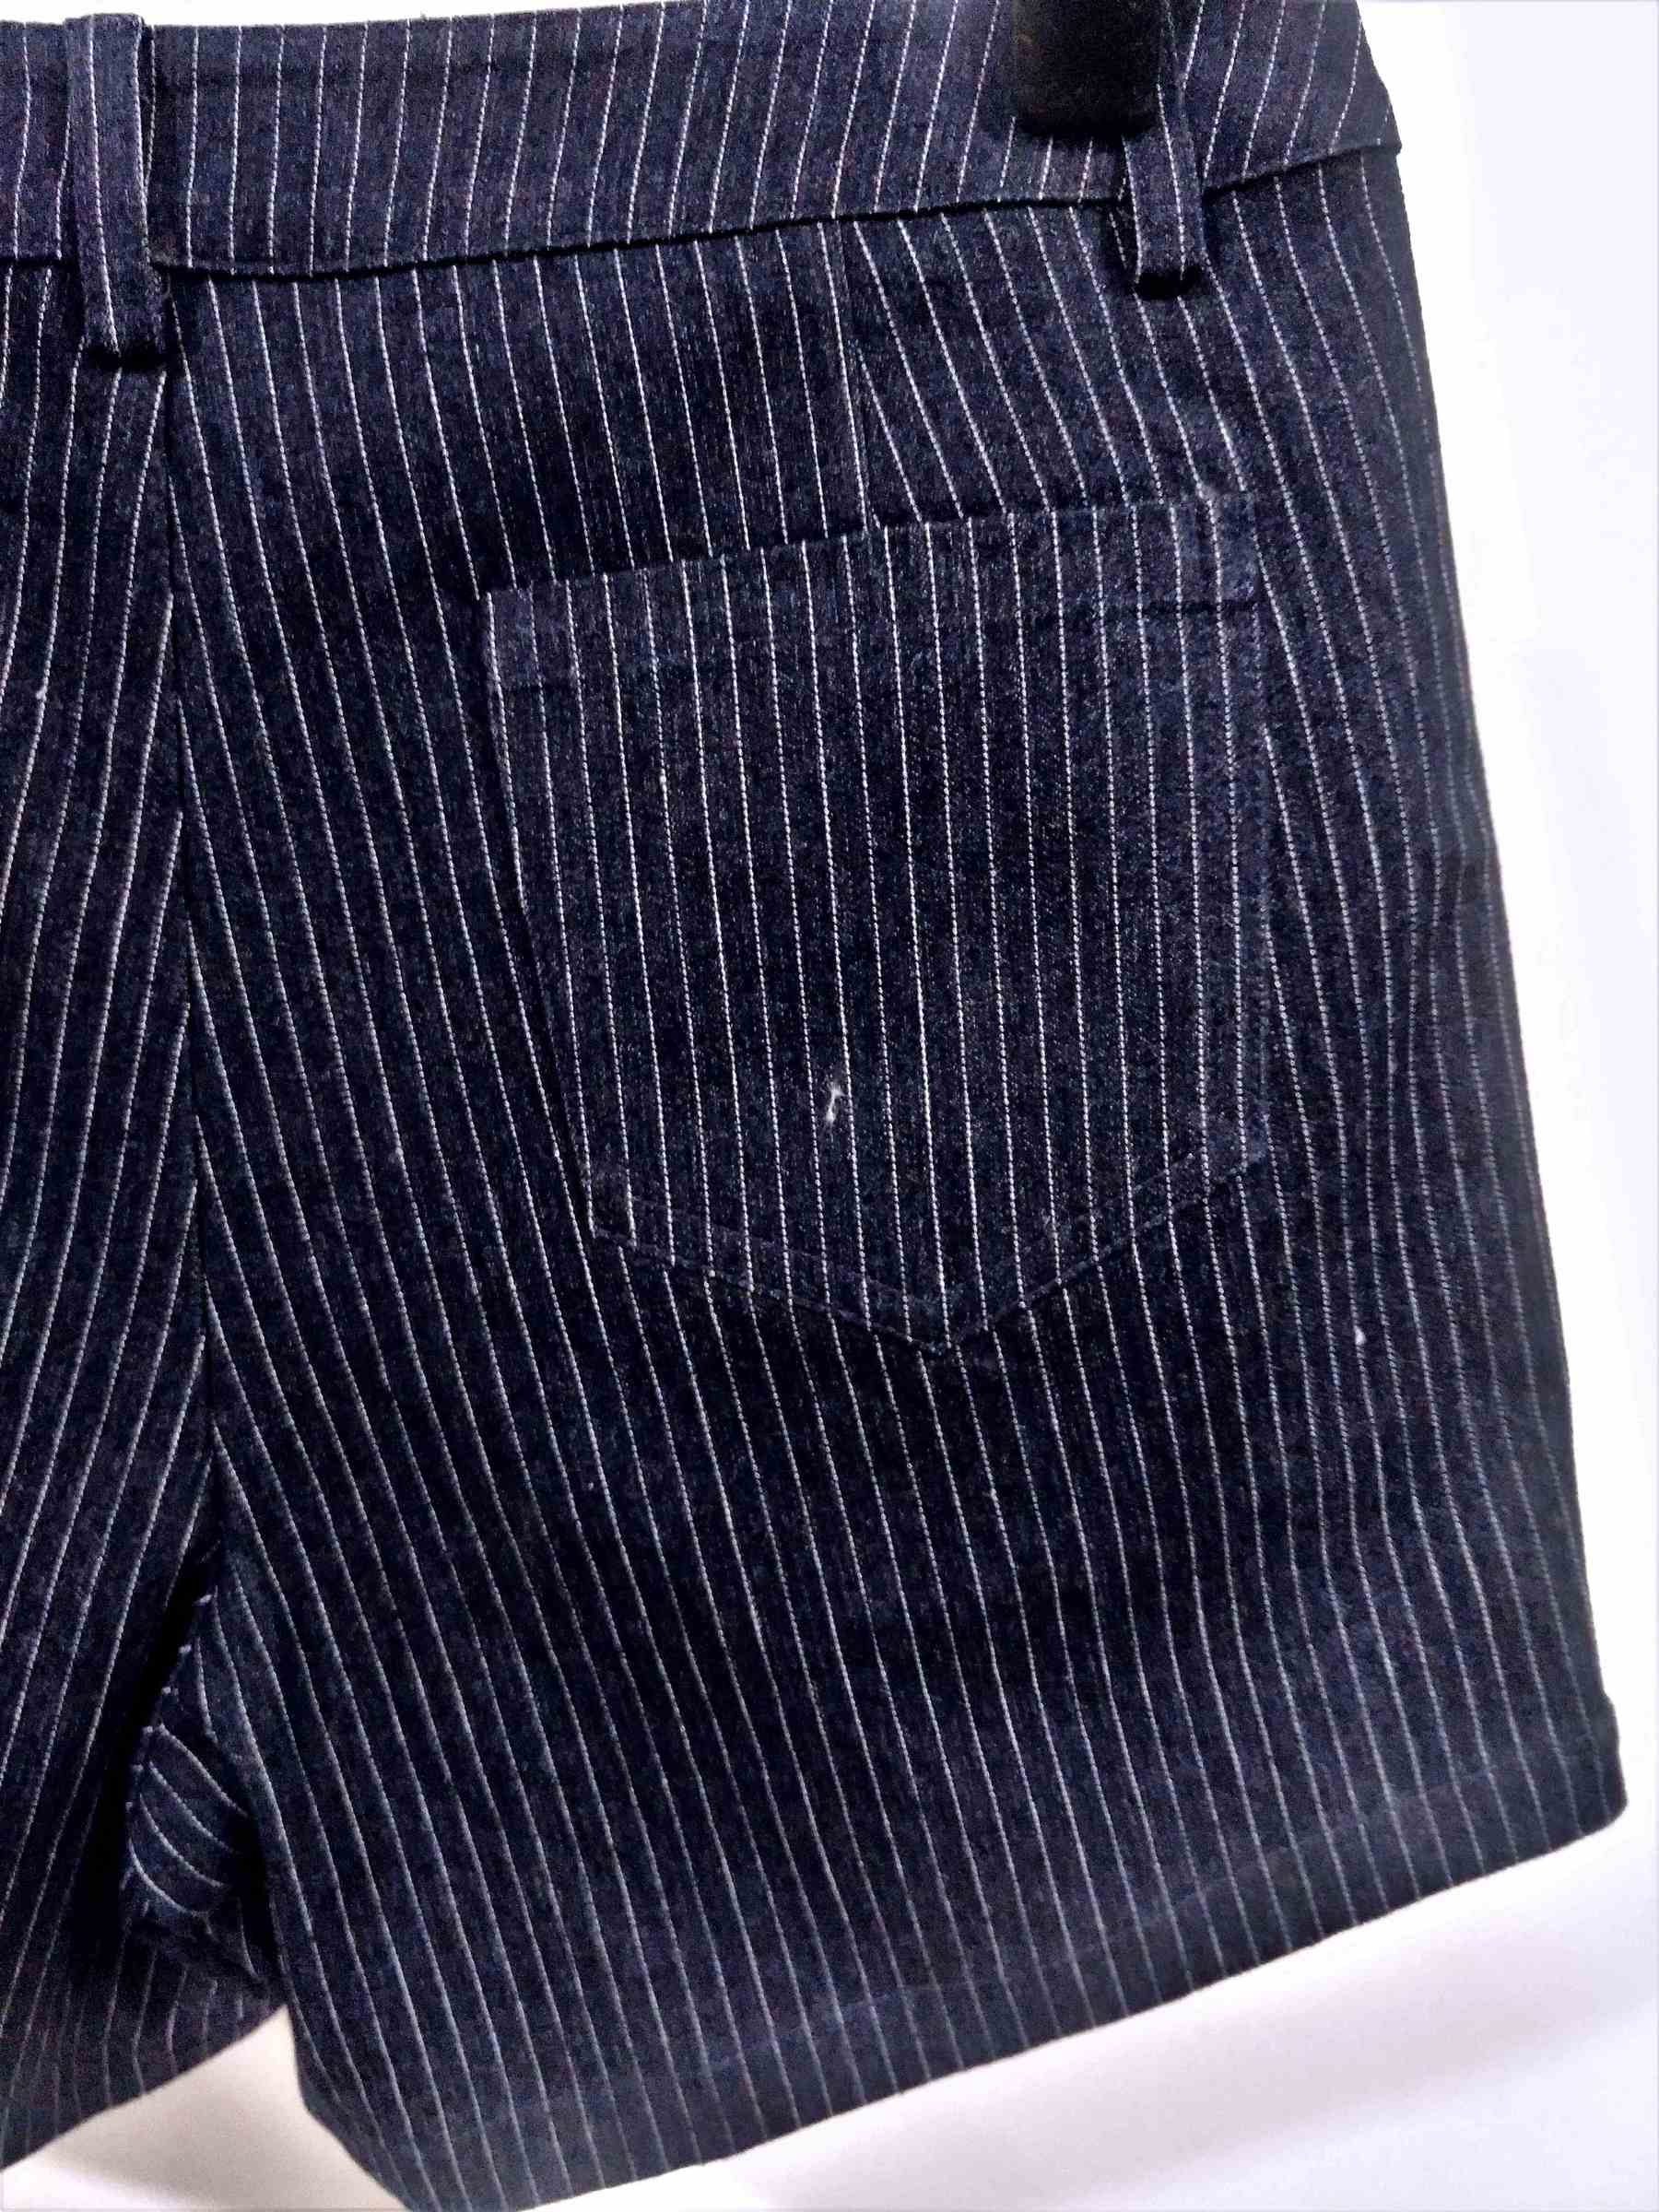 White star hem pattern shorts with striped shorts in navy ladies fashion for mini shorts (1).jpg